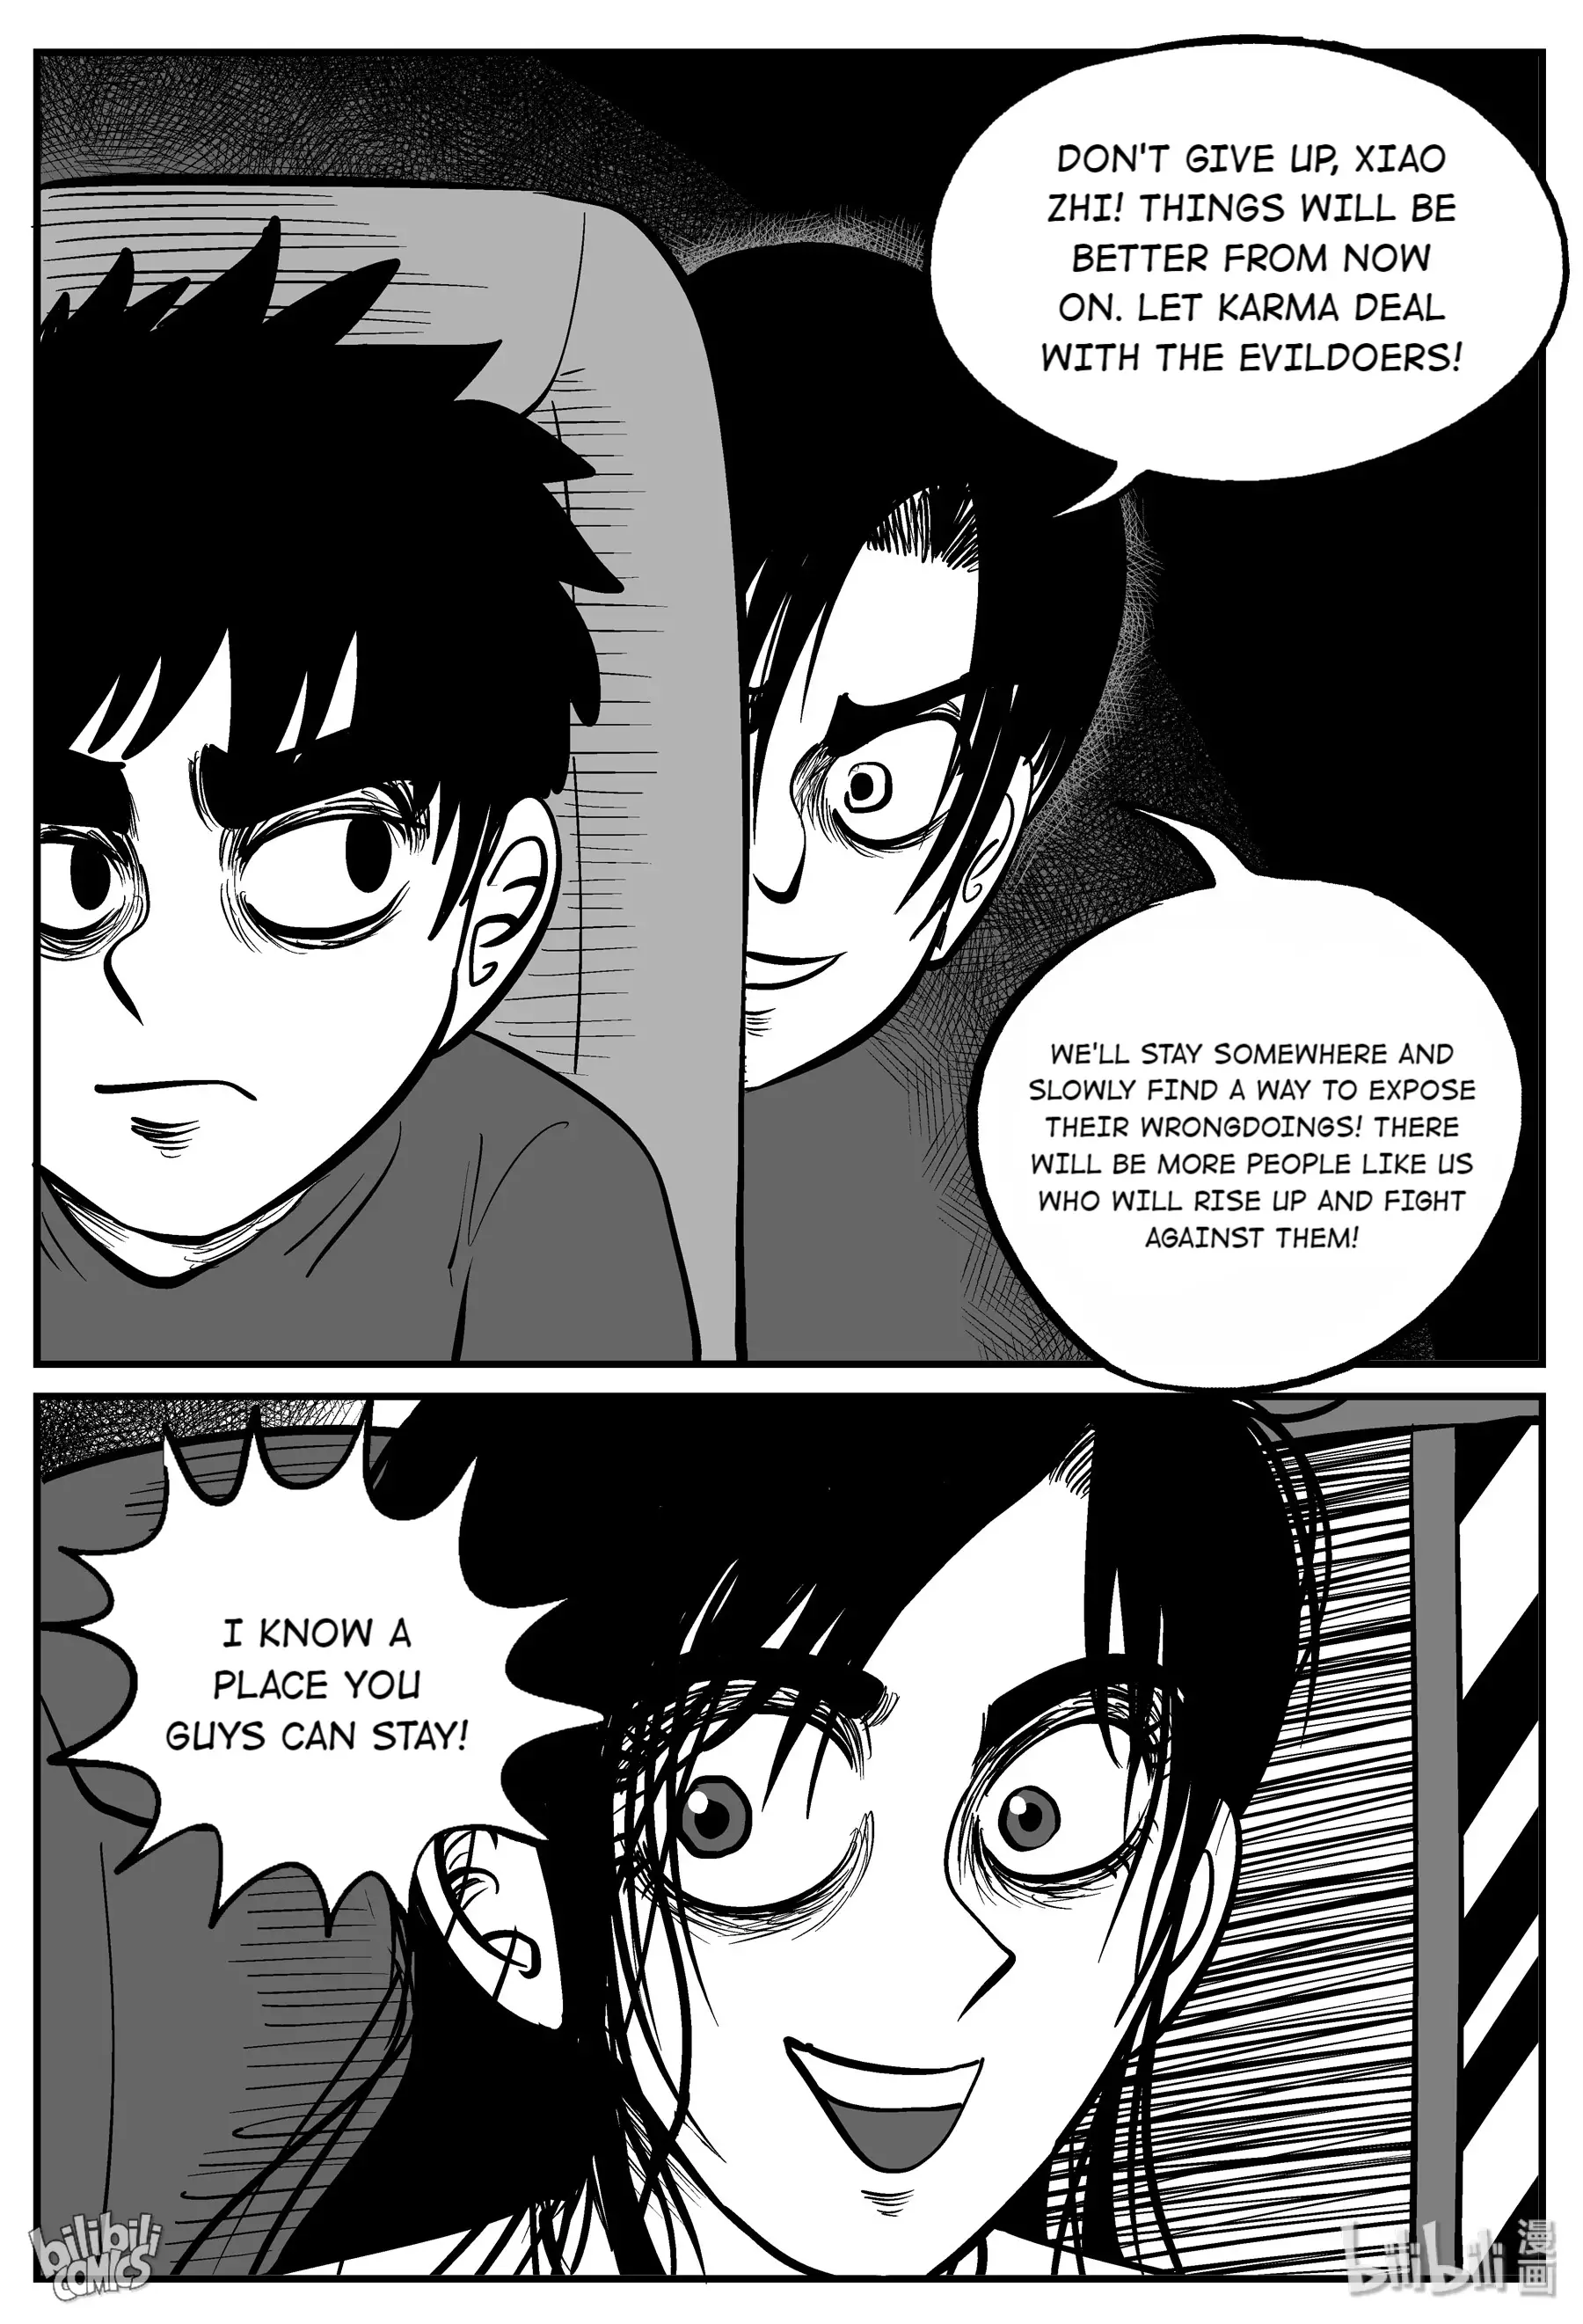 Strange Tales Of Xiao Zhi - 144 page 19-234645aa